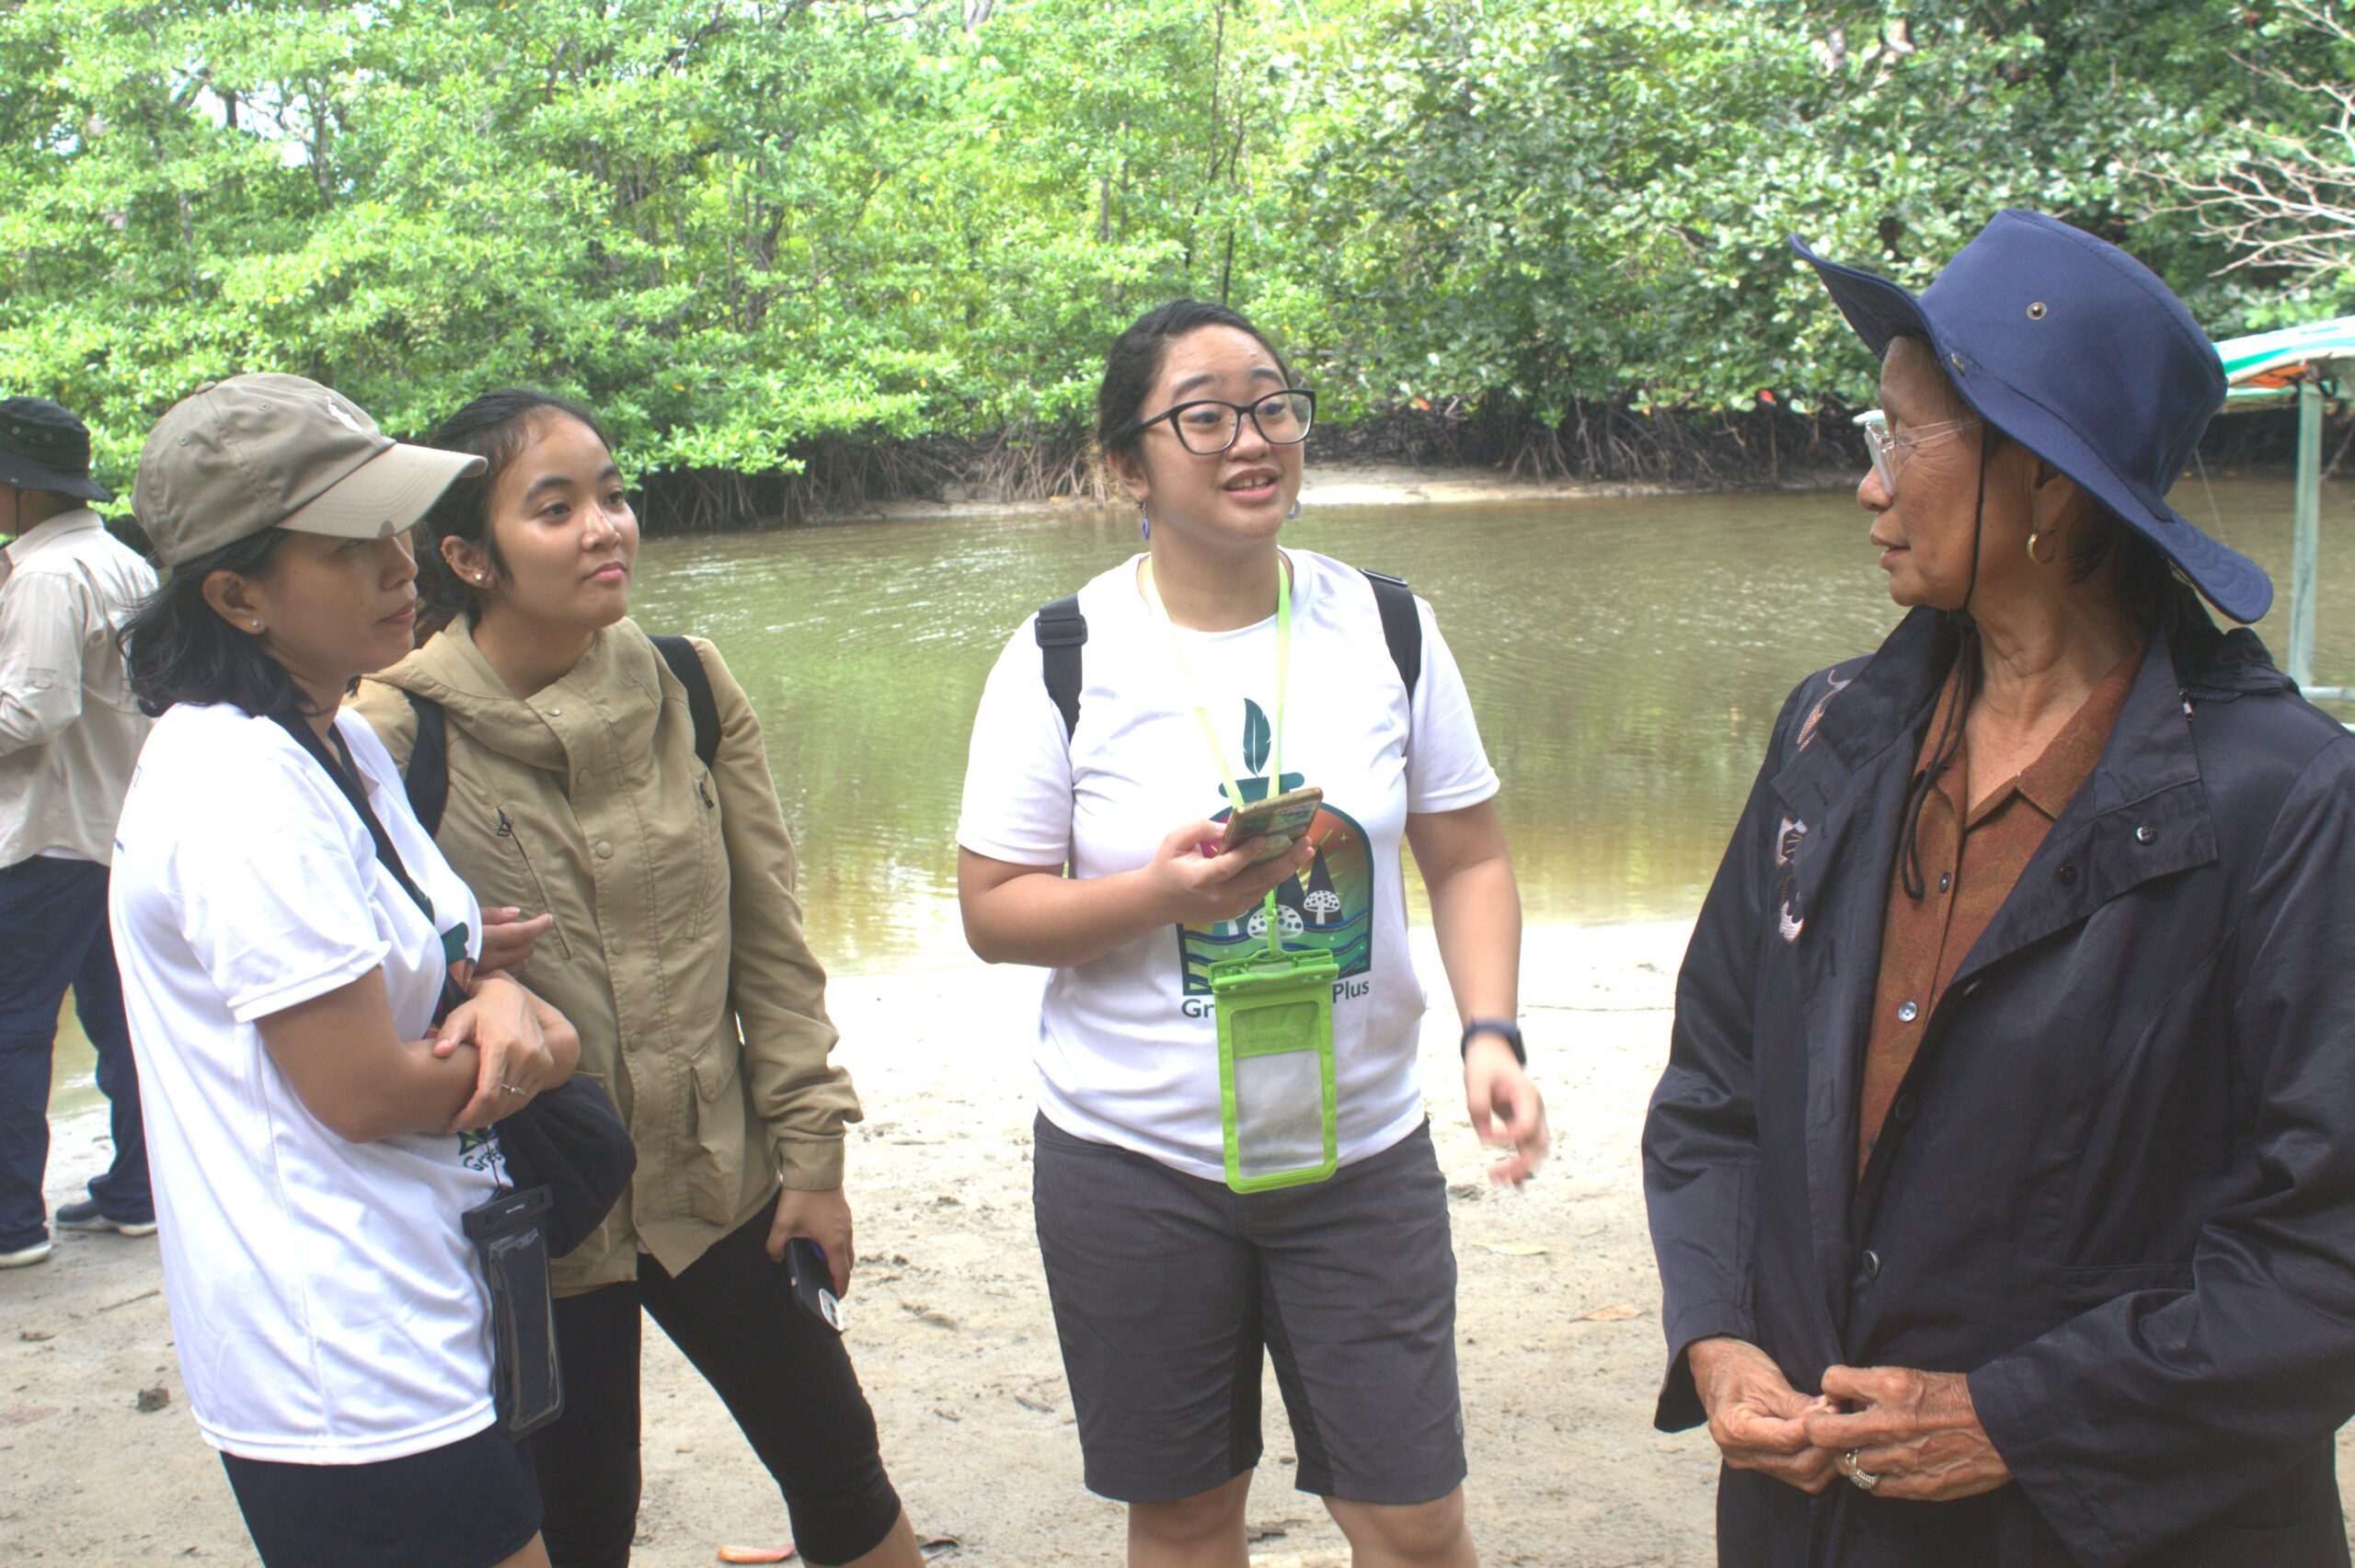 Puerto Princesa’s battle: Safeguarding its mangrove forests